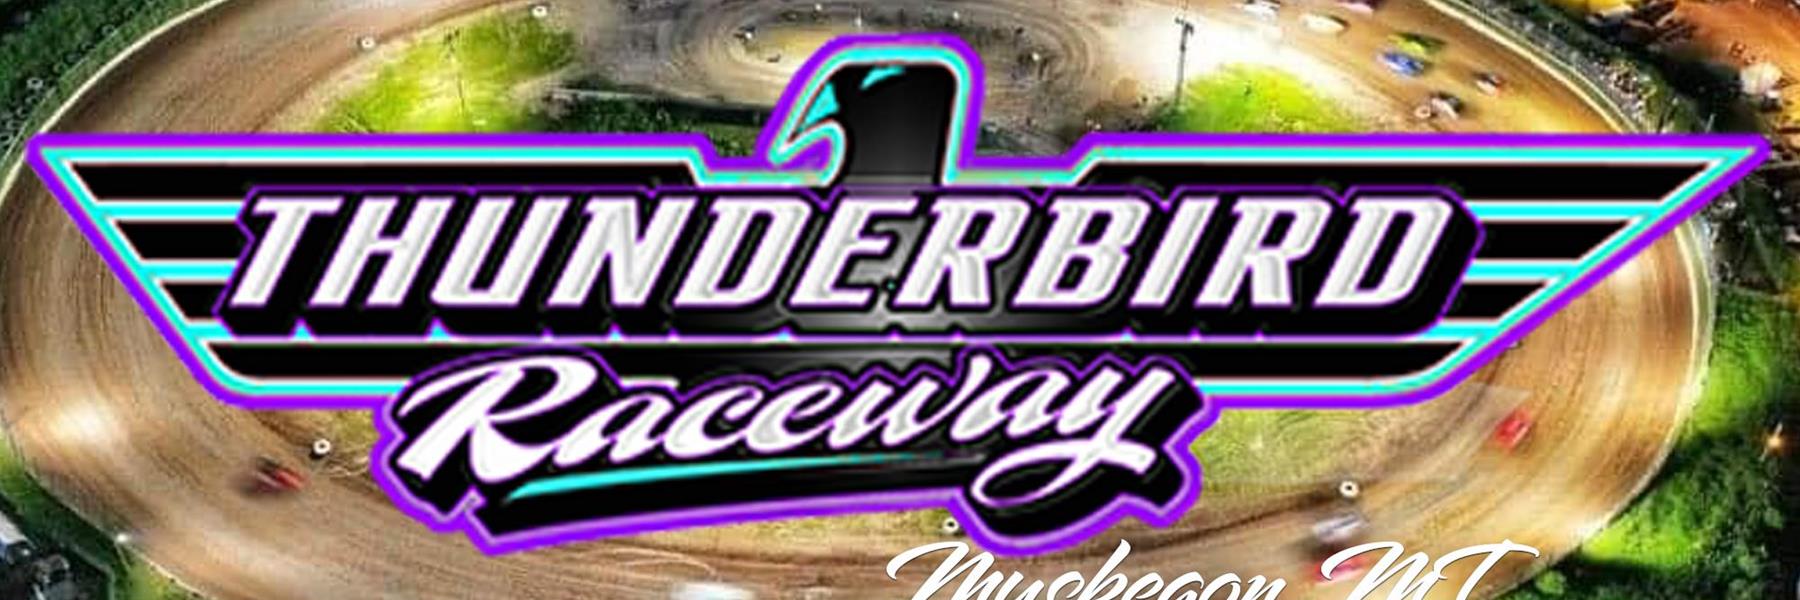 7/3/2021 - Thunderbird Raceway